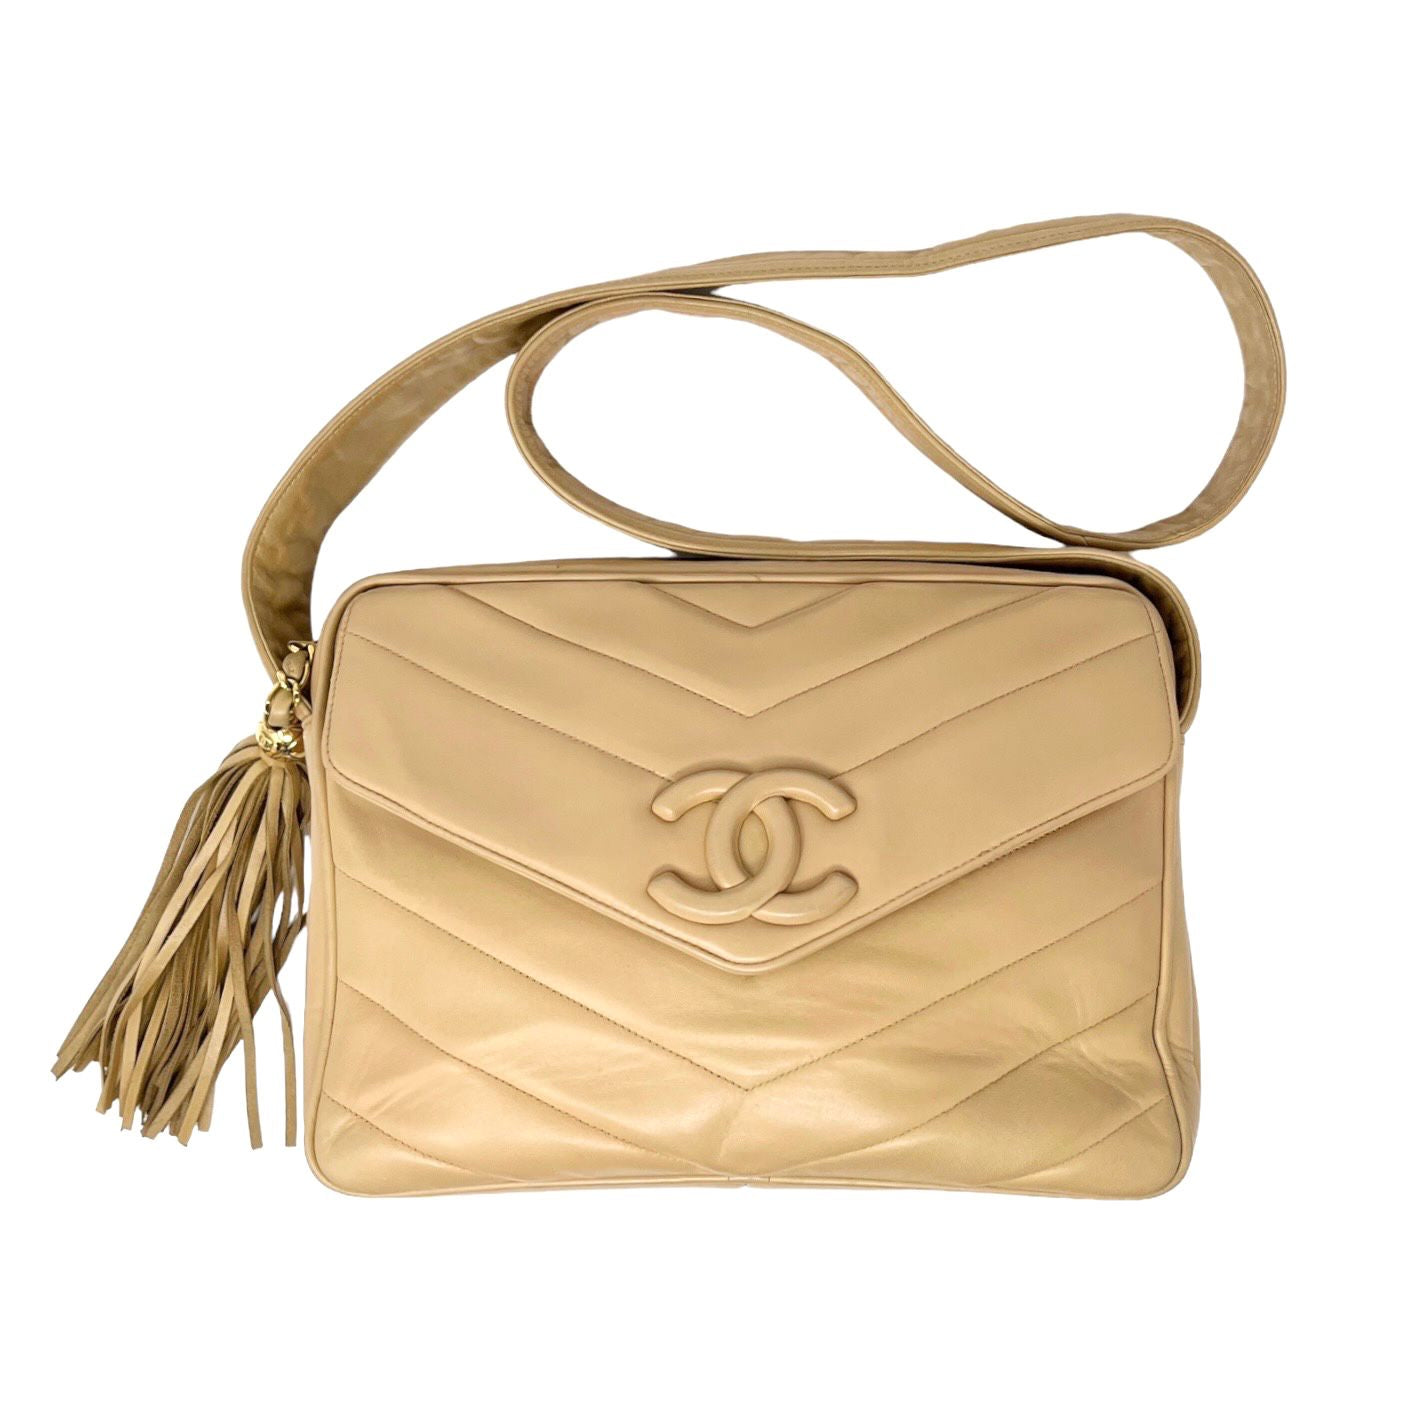 Chanel Logo Chevron Bag